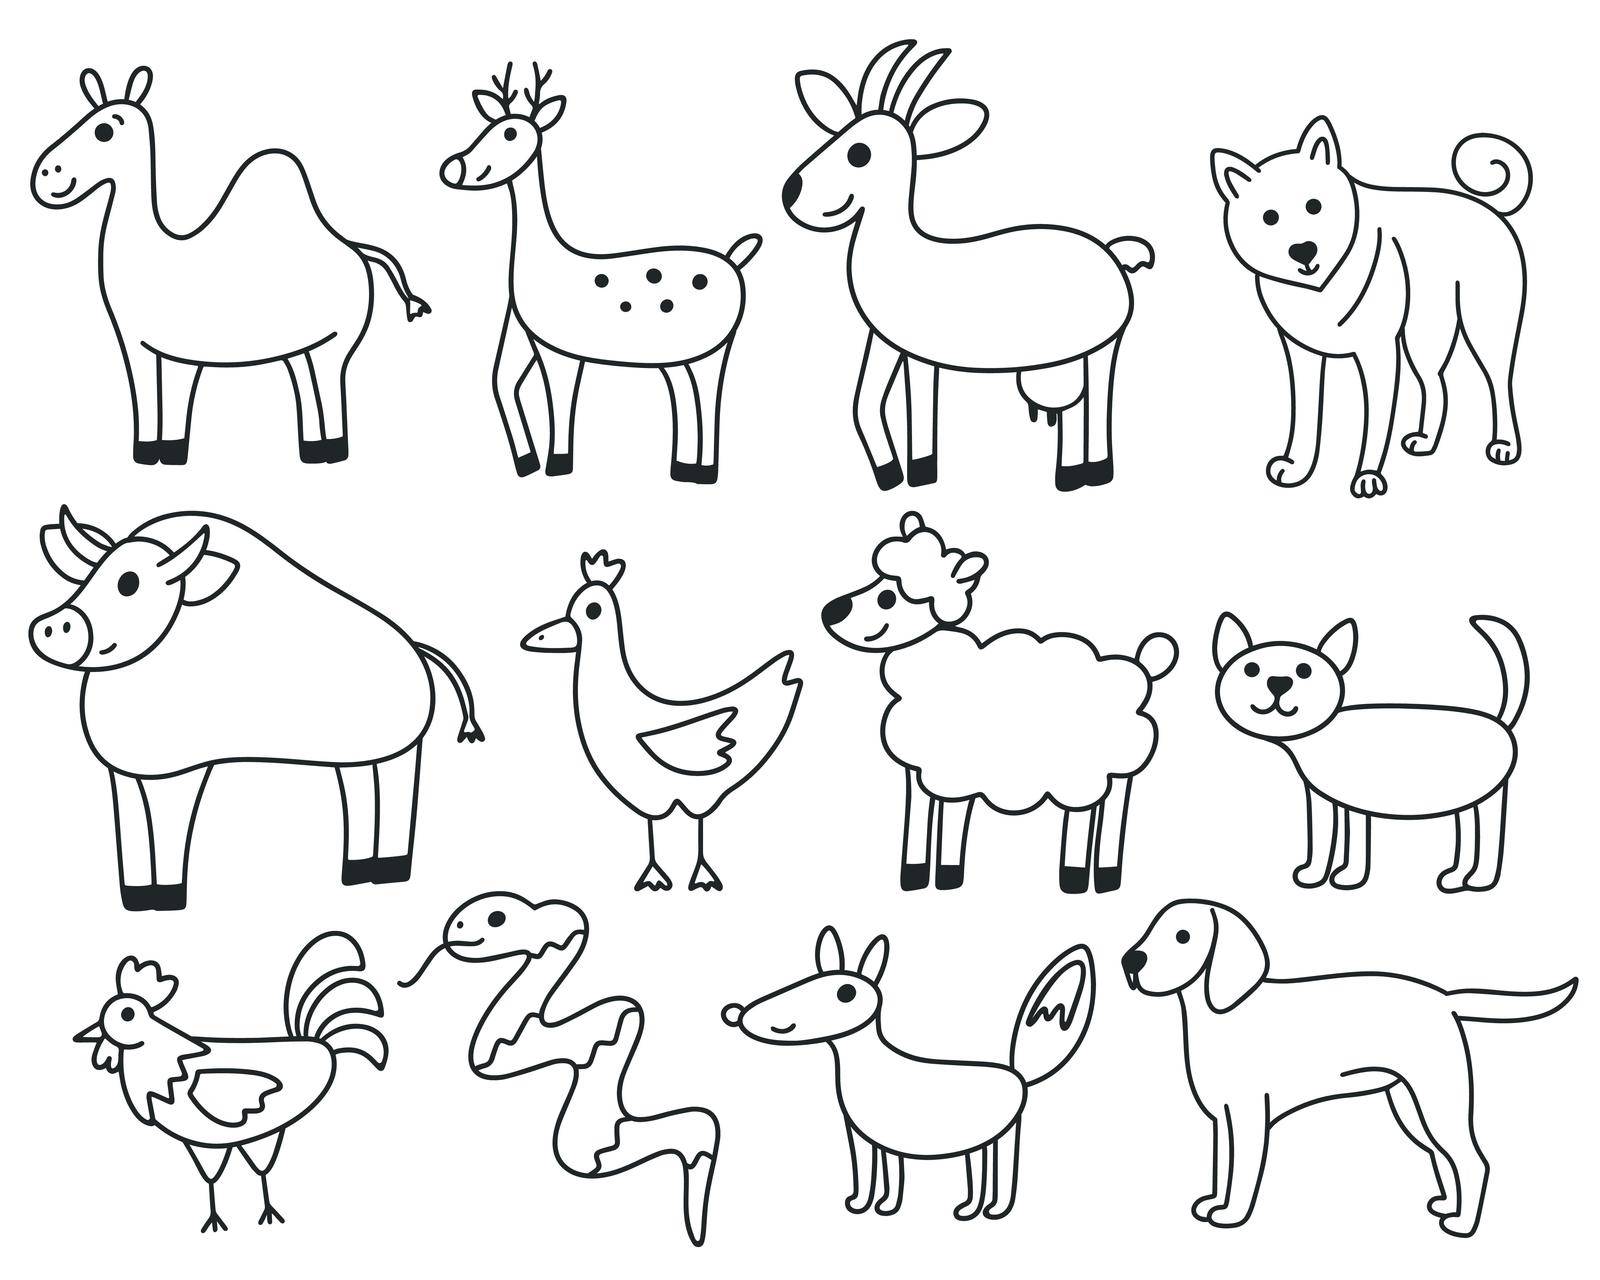 Doodle simple animals set by TassiaK